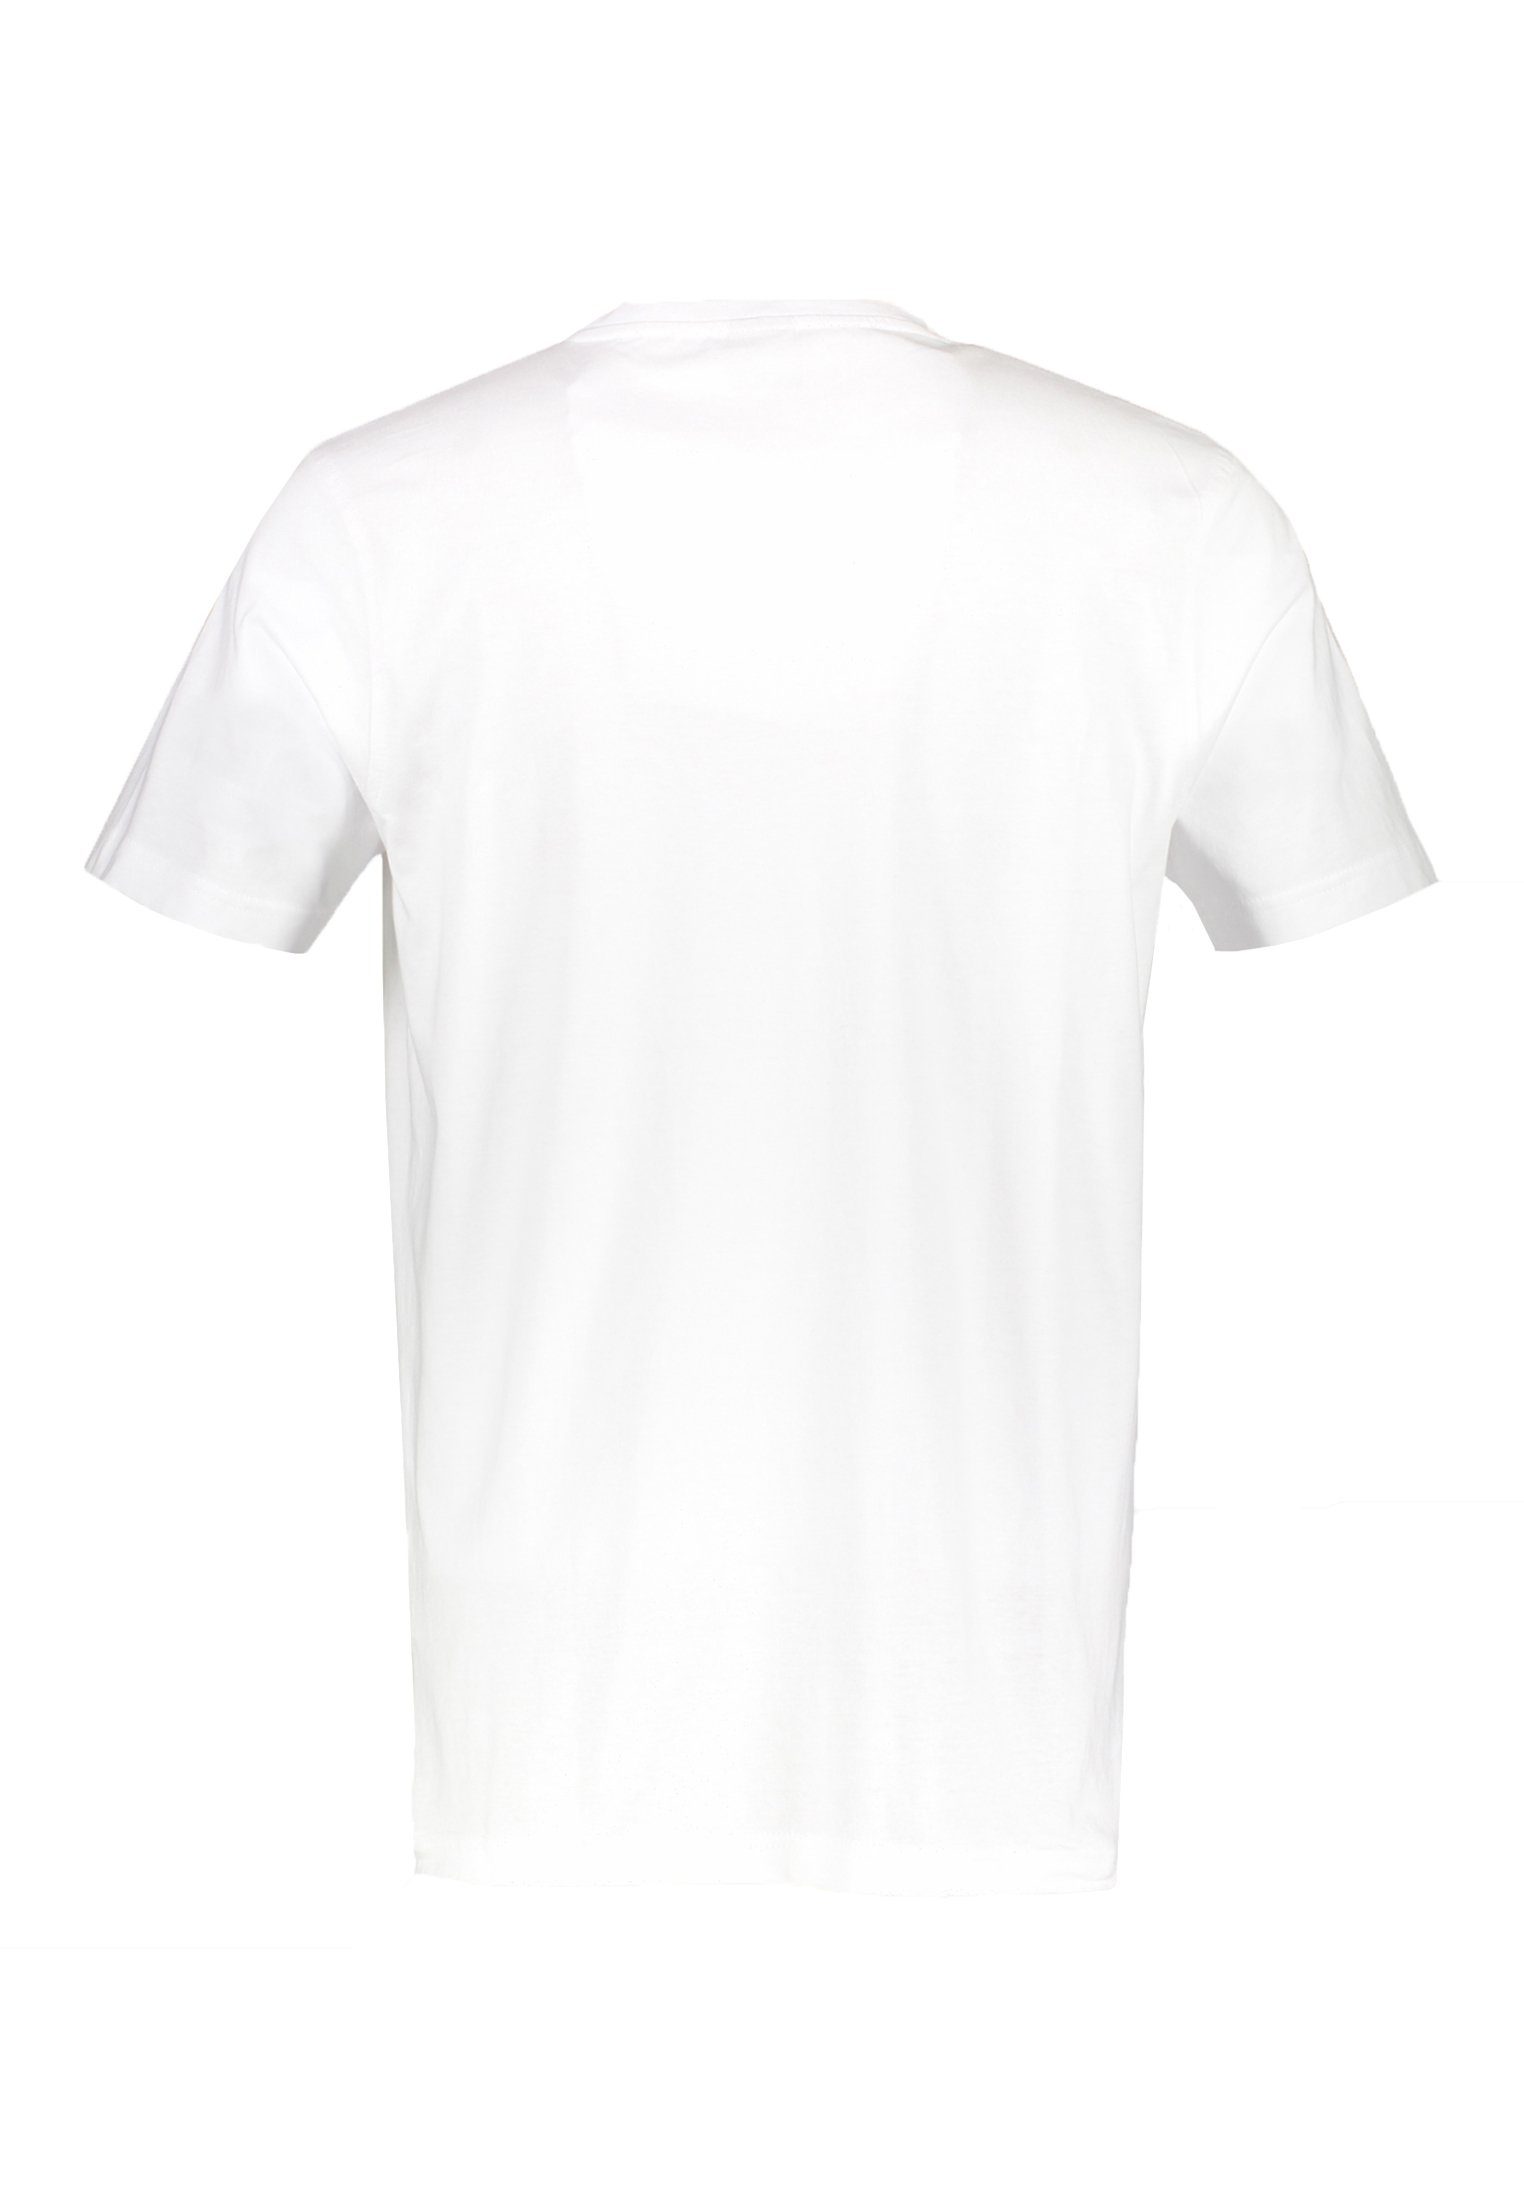 LERROS T-Shirt T-Shirt LERROS V-Ausschnitt Doppelpack Weiß